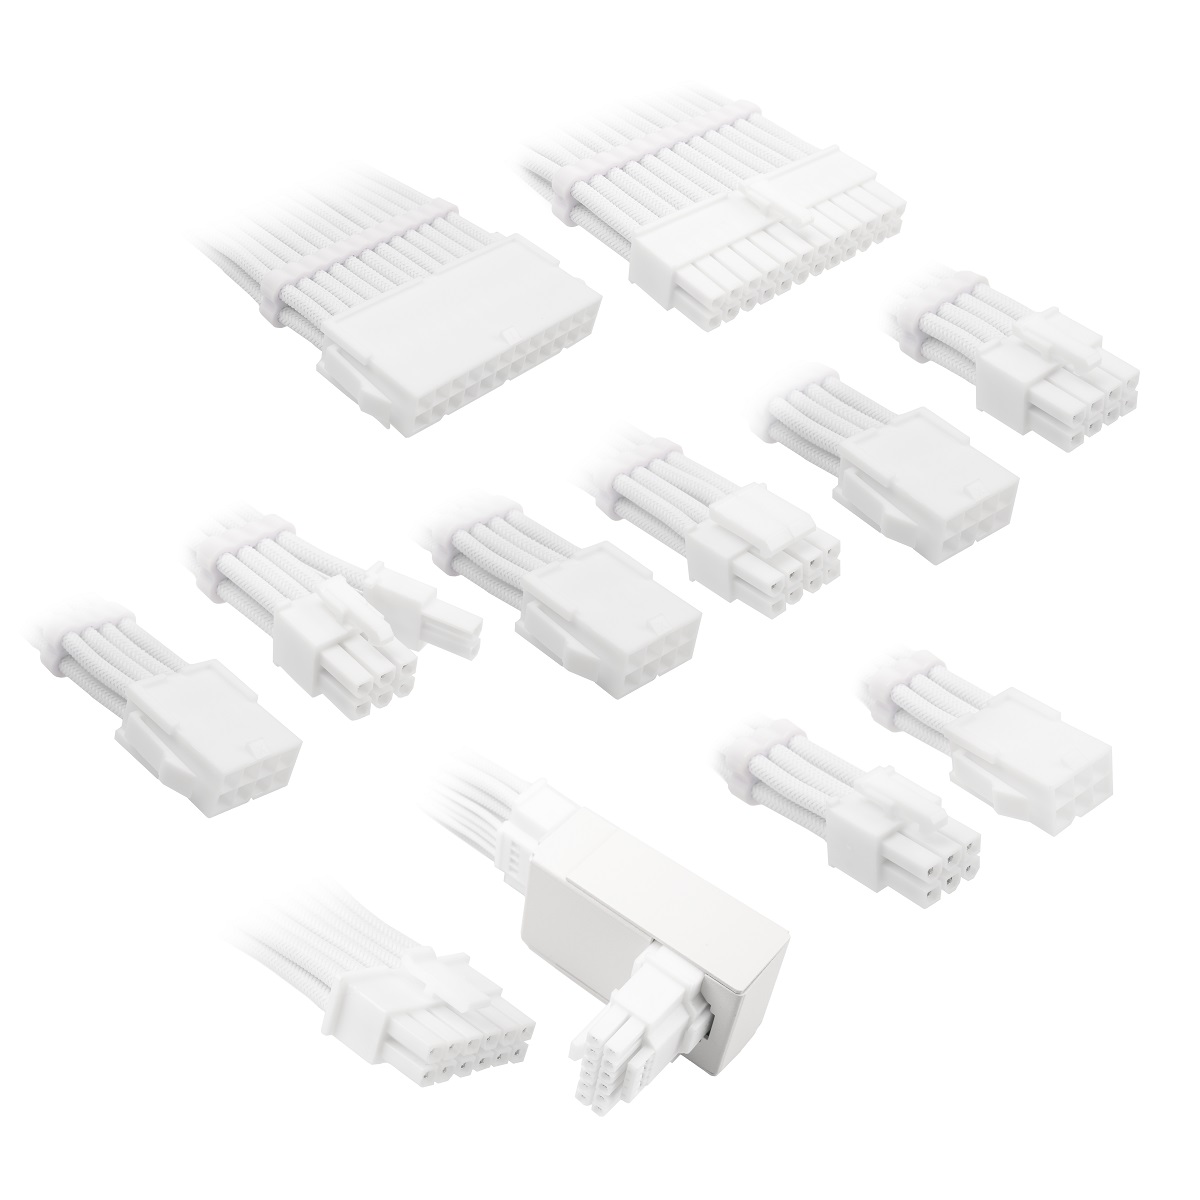 Kolink Core Pro Braided Cable Extension Kit 12VHWPR Type 1 - Brilliant White